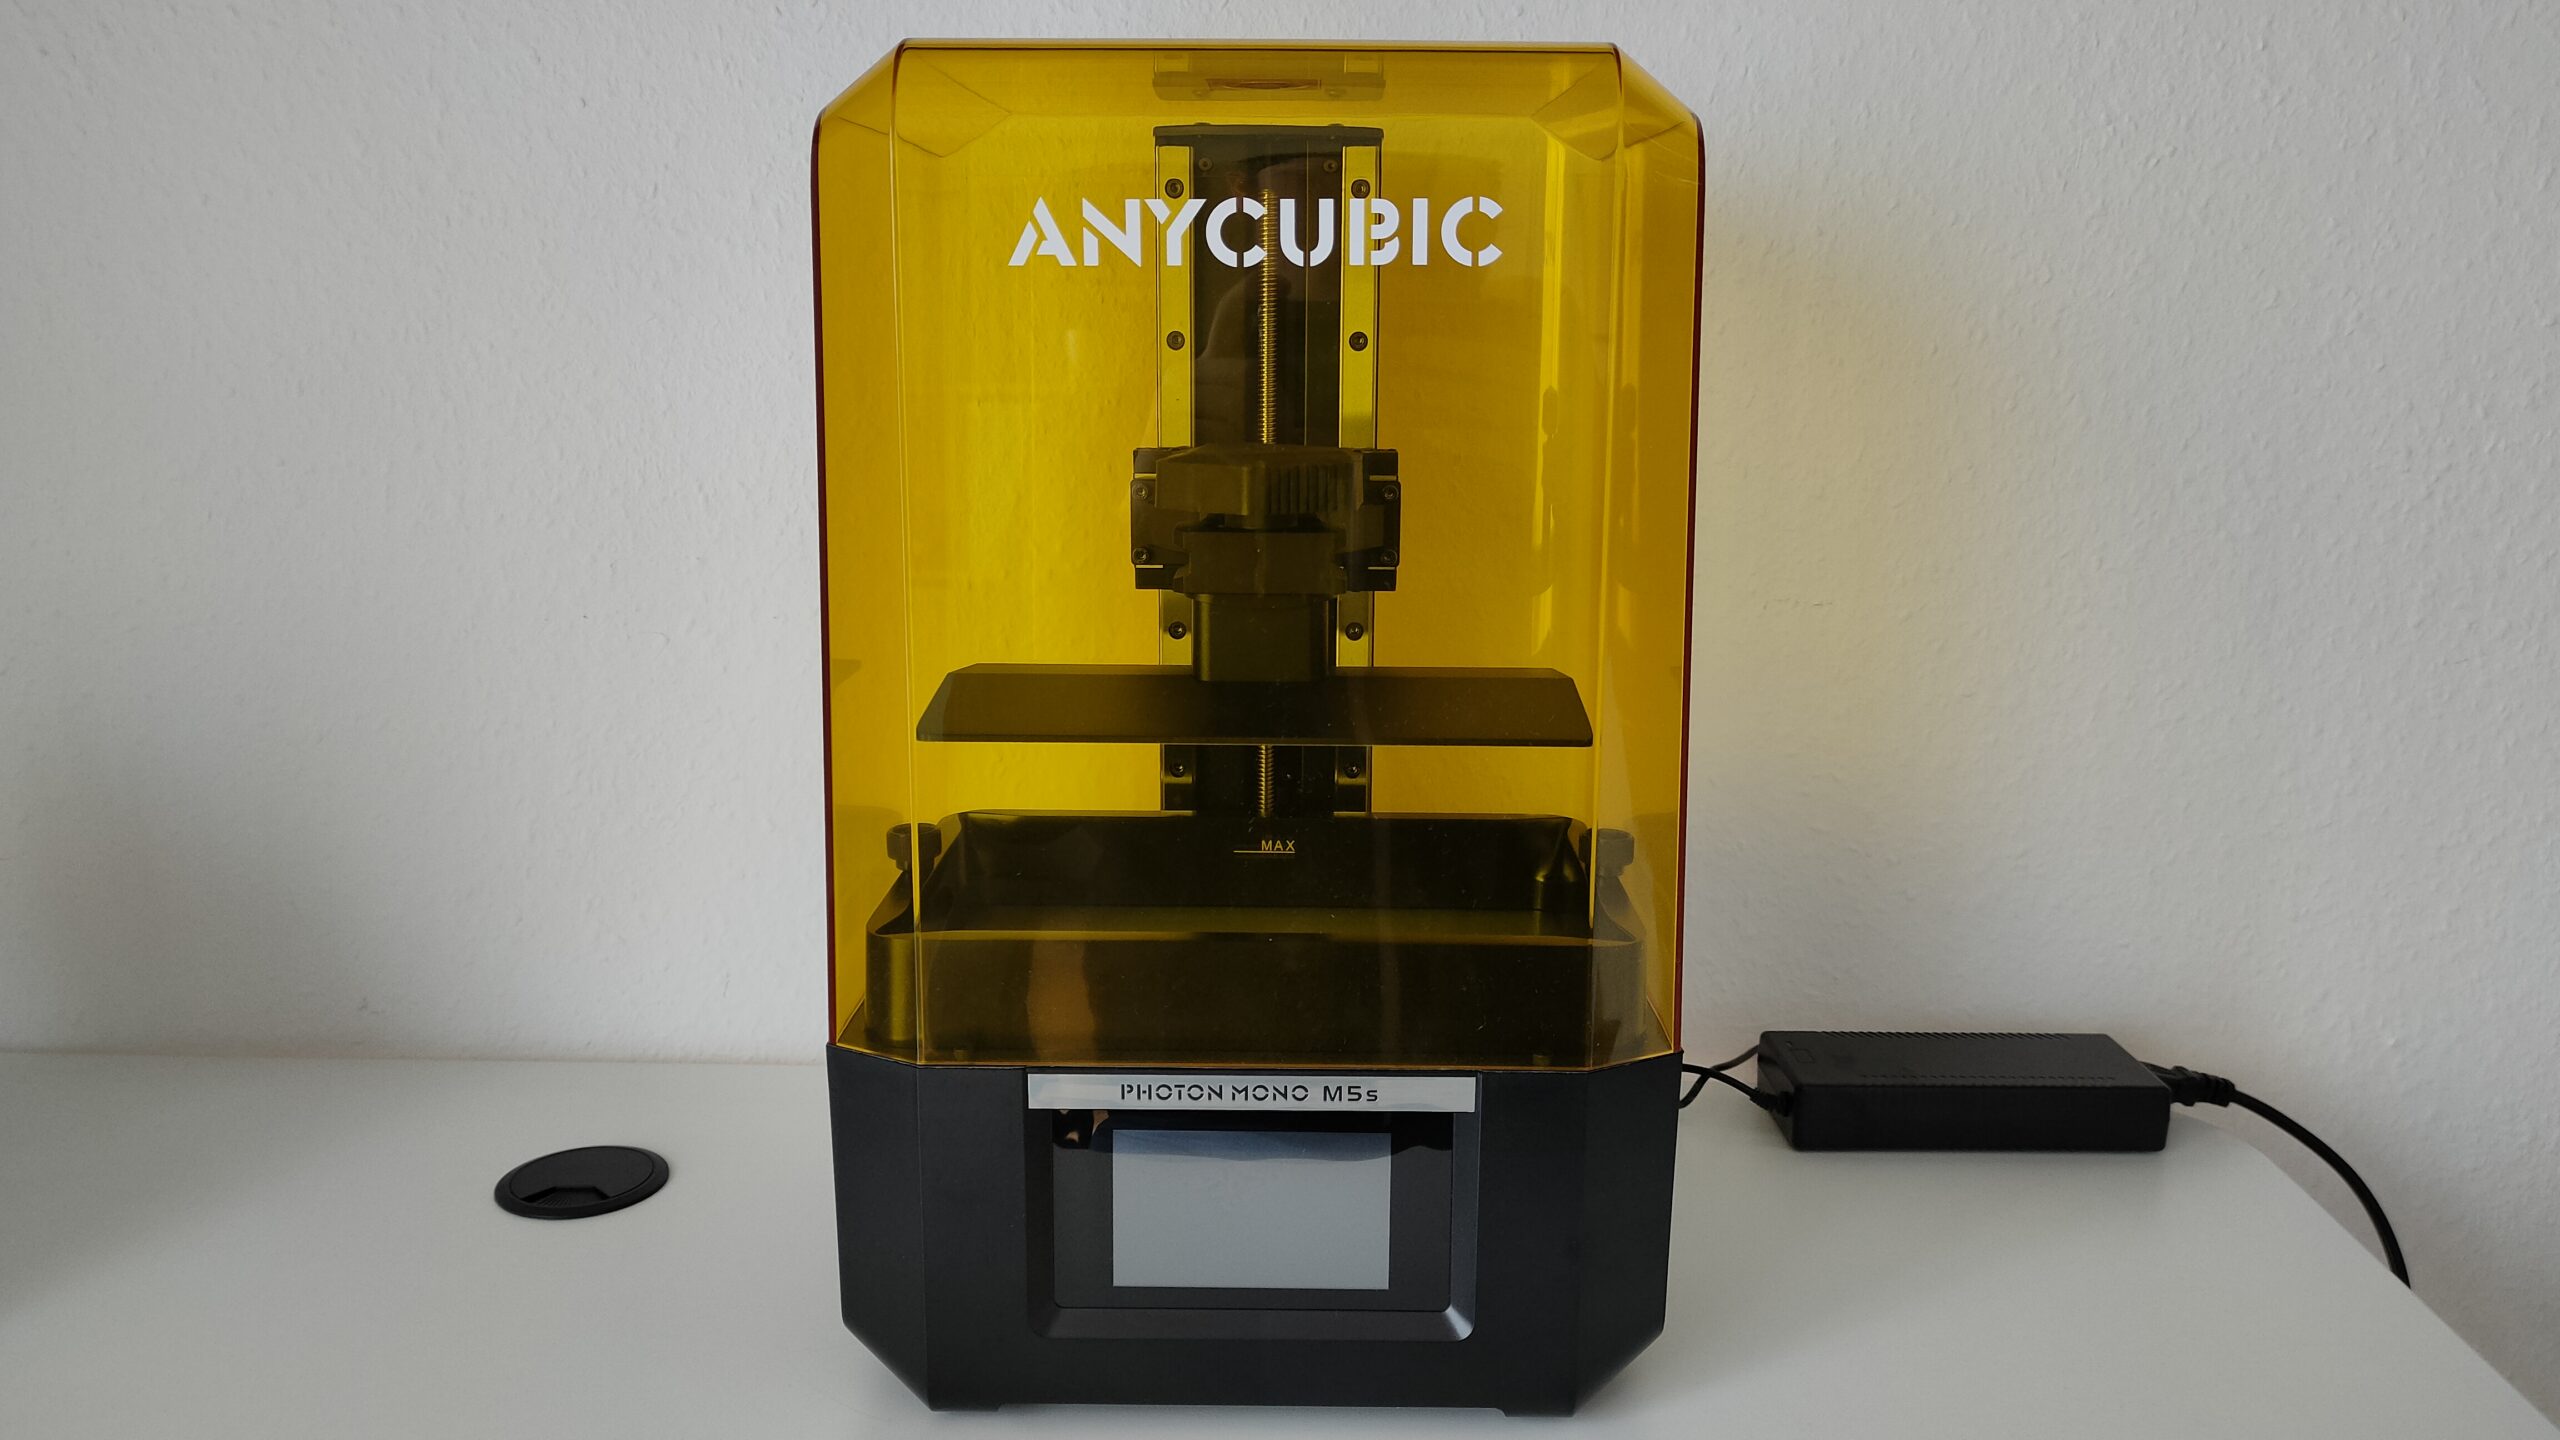 Anycubic Photon Mono 2 Review (Beginner Miniature Printer)